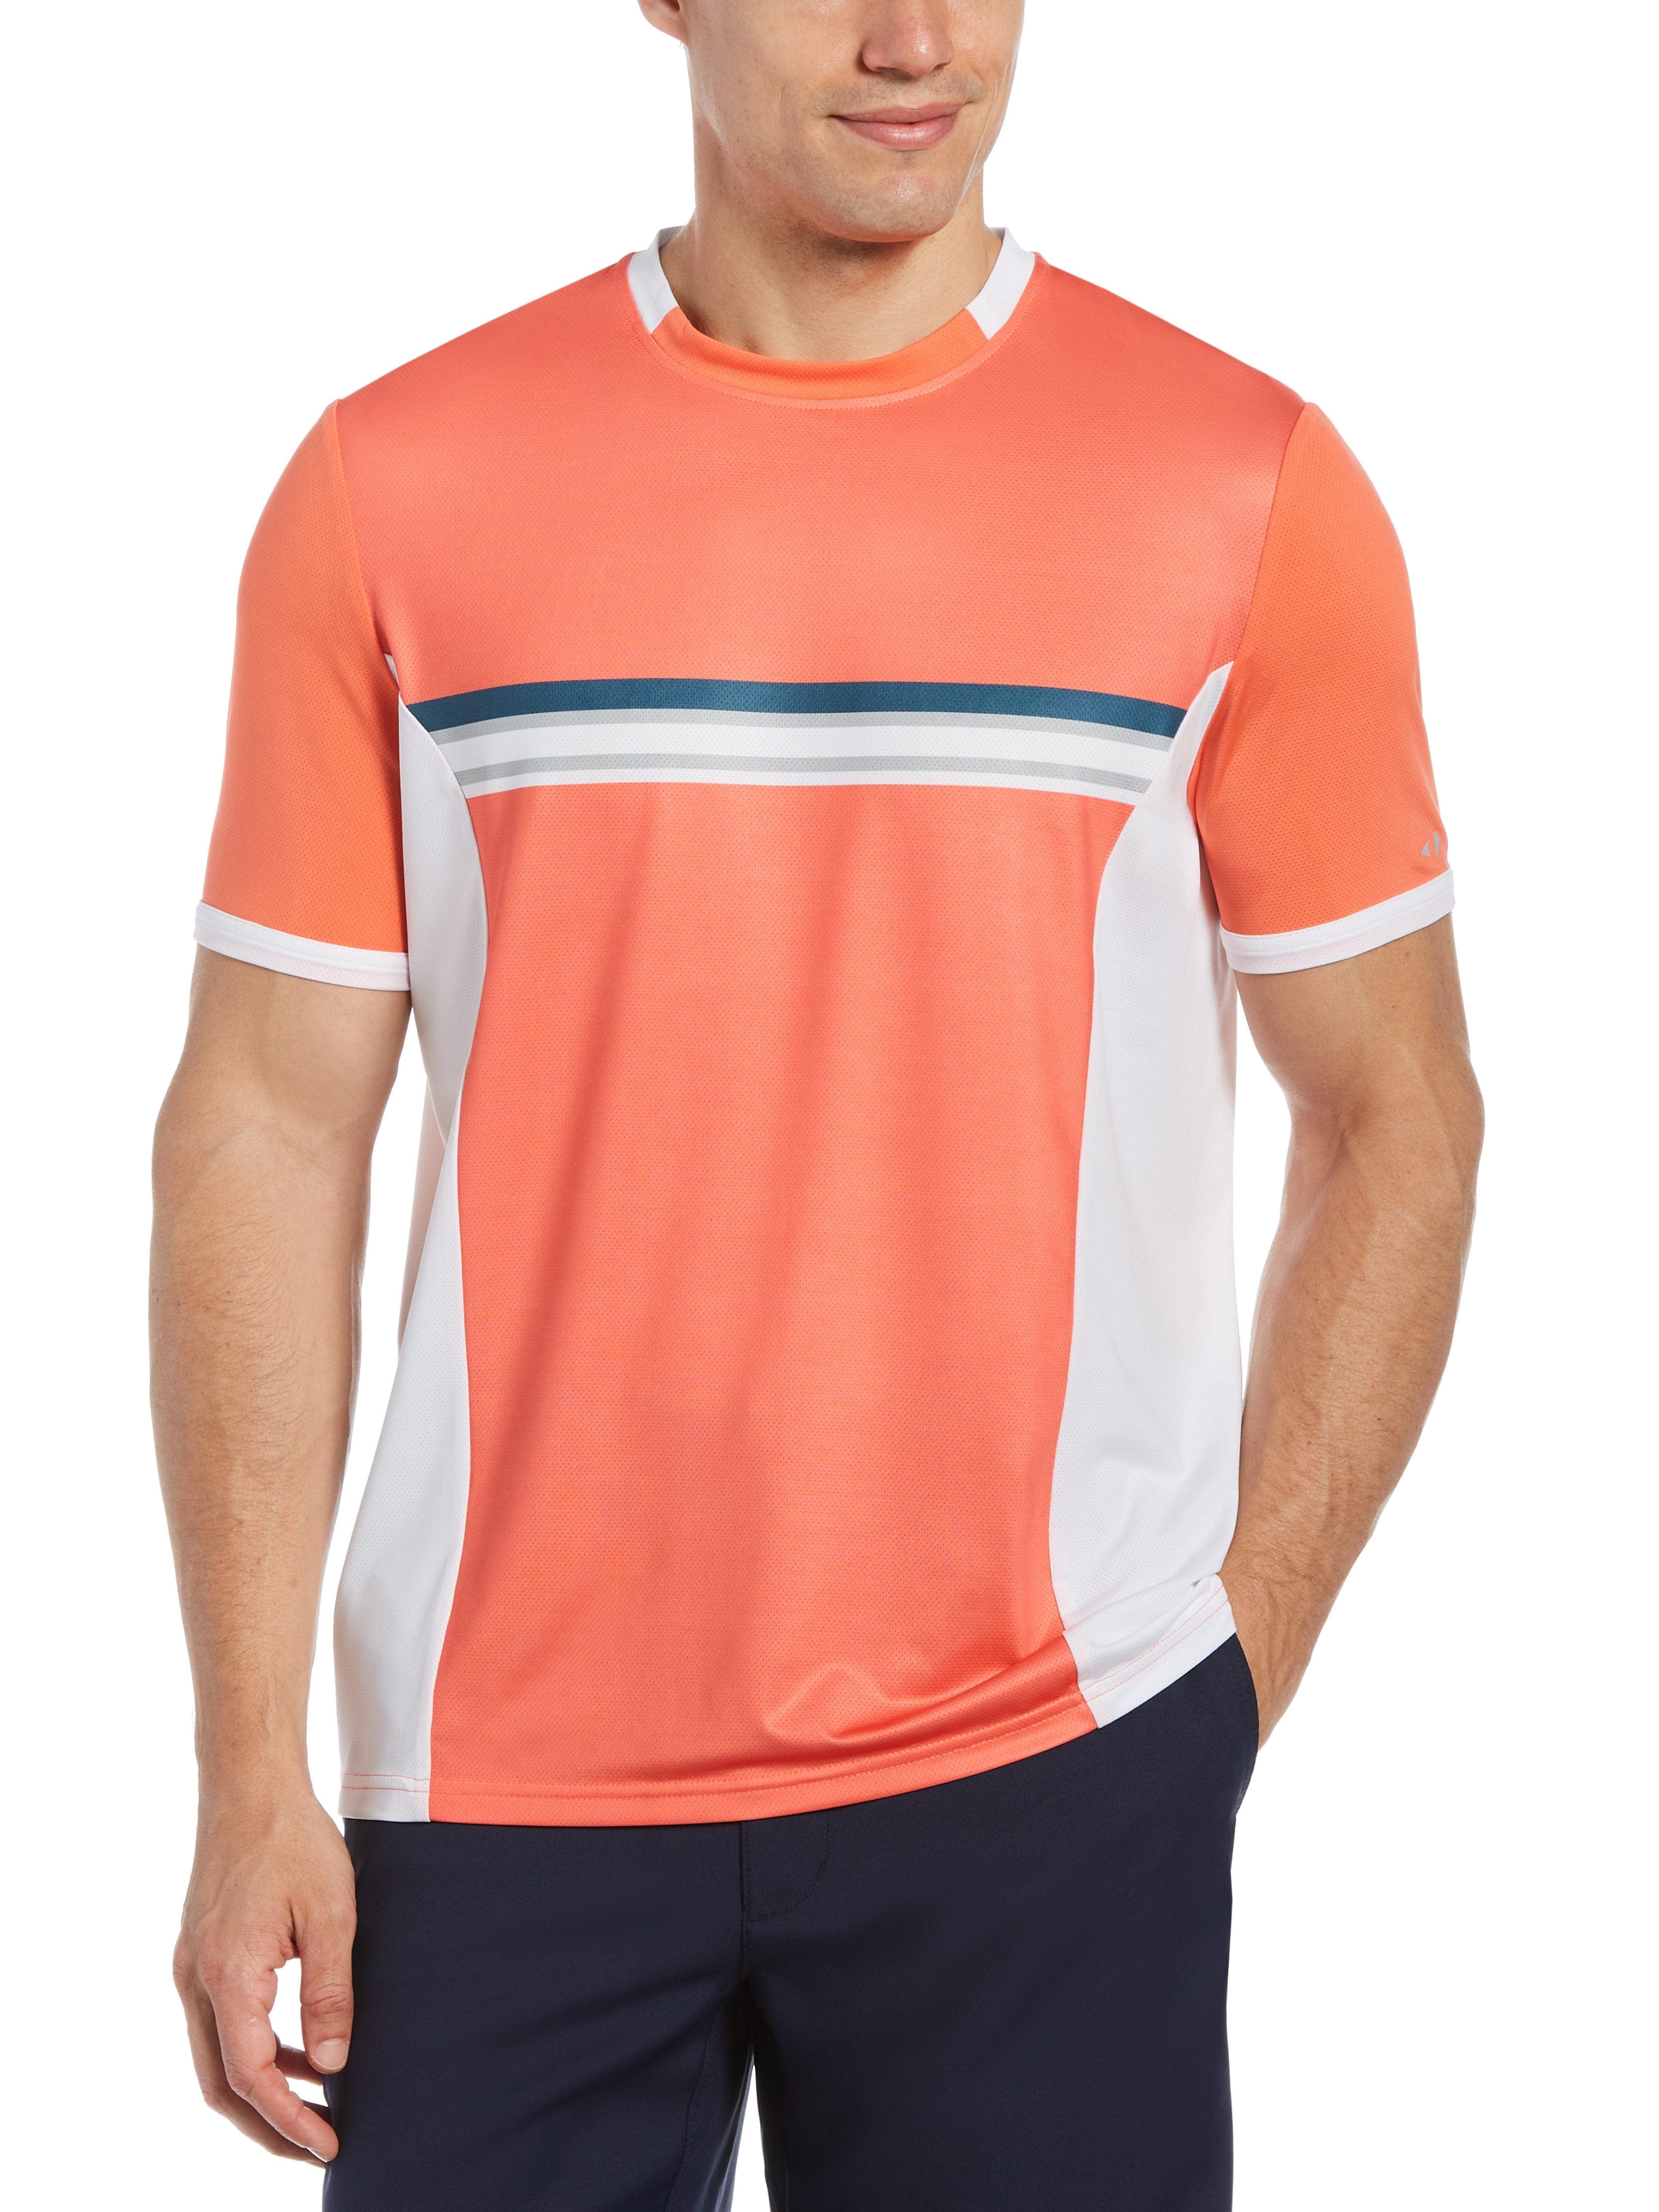 Grand Slam Mens Pieced Print Chest Stripe Crew Neck Tennis T-Shirt, Size Large, Emberglow Orange, Polyester/Spandex | Golf Apparel Shop